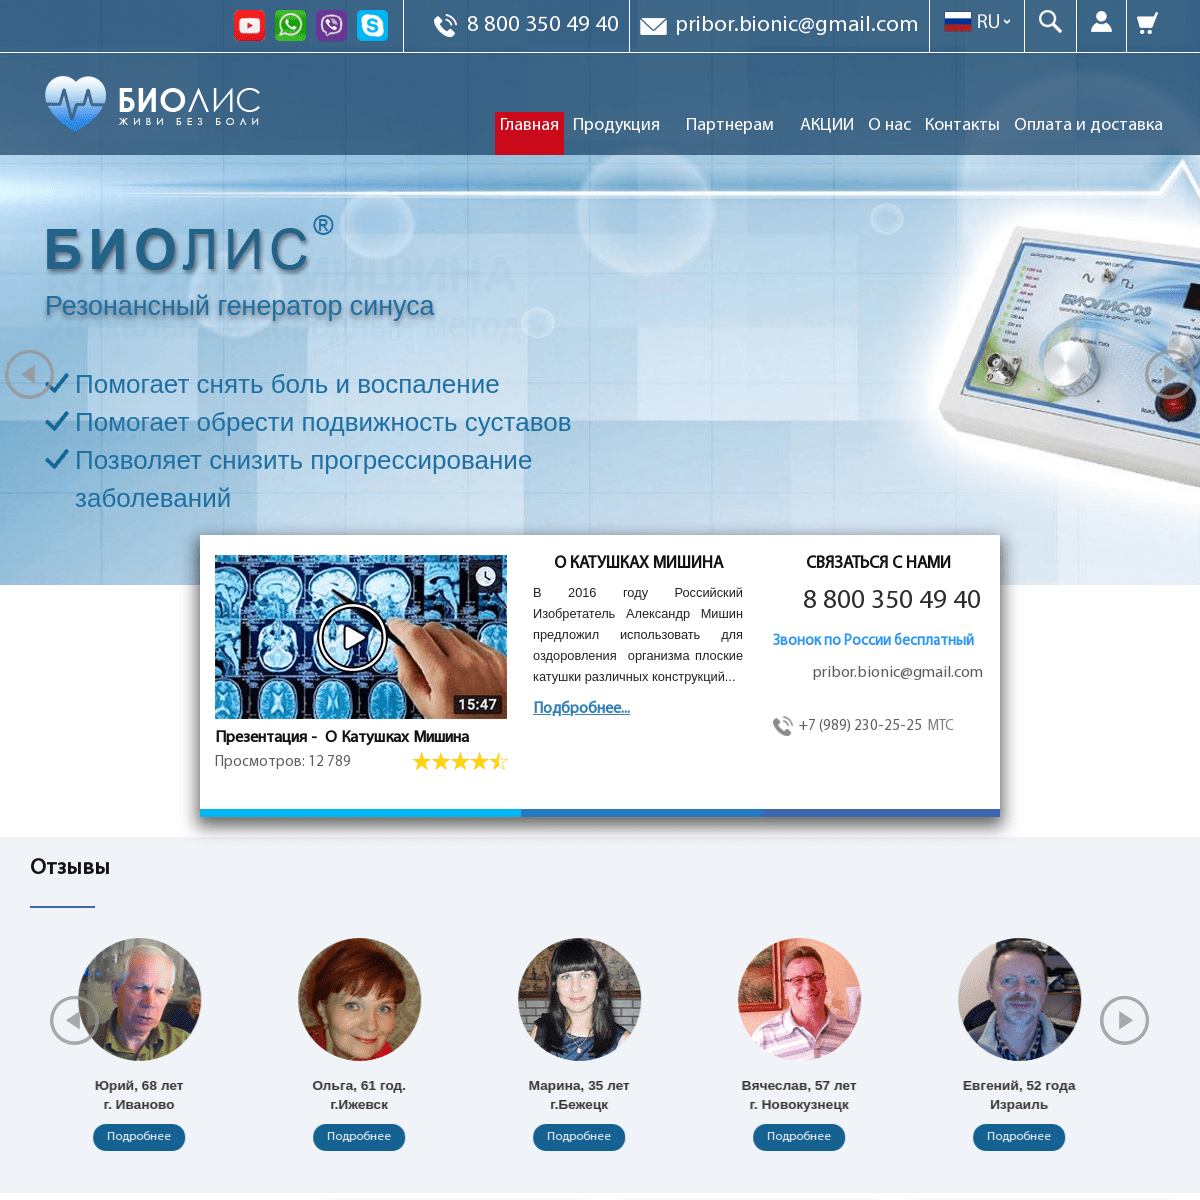 A complete backup of biolis.ru